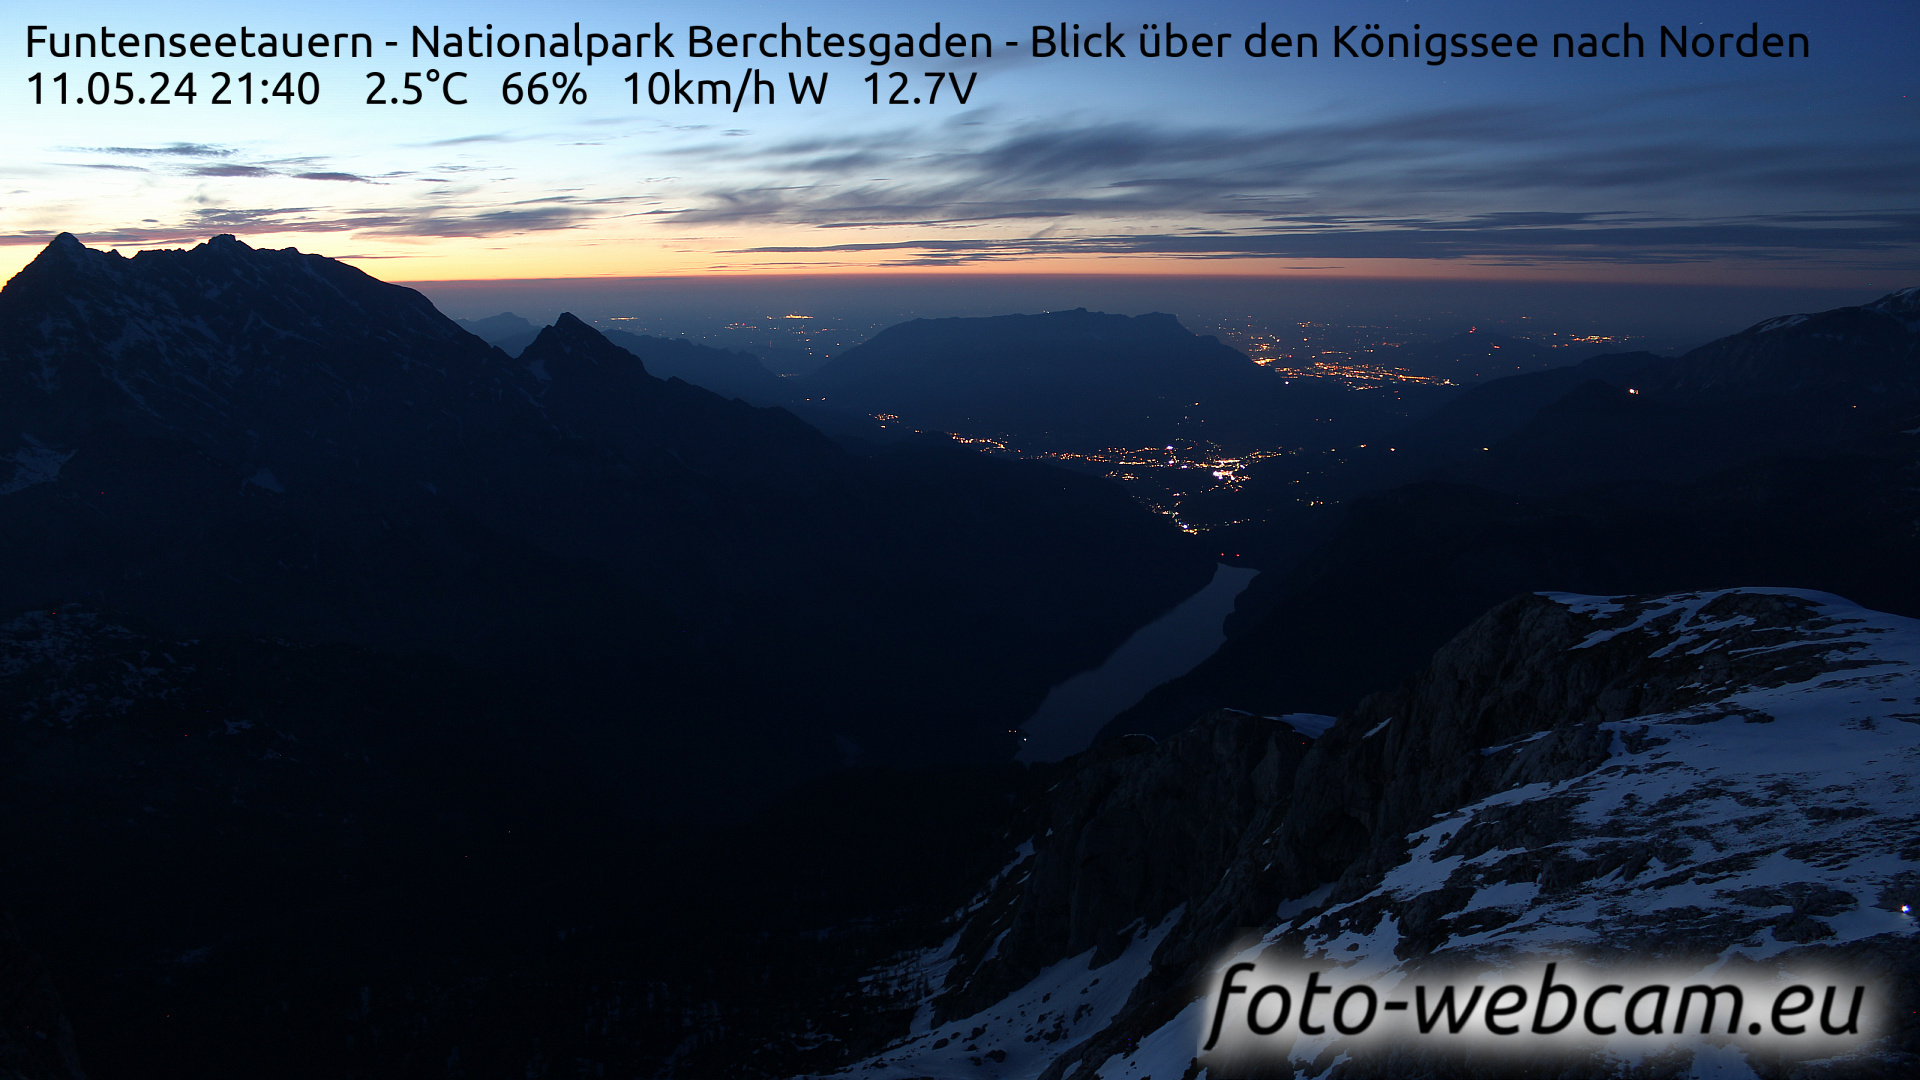 Berchtesgaden Me. 21:48